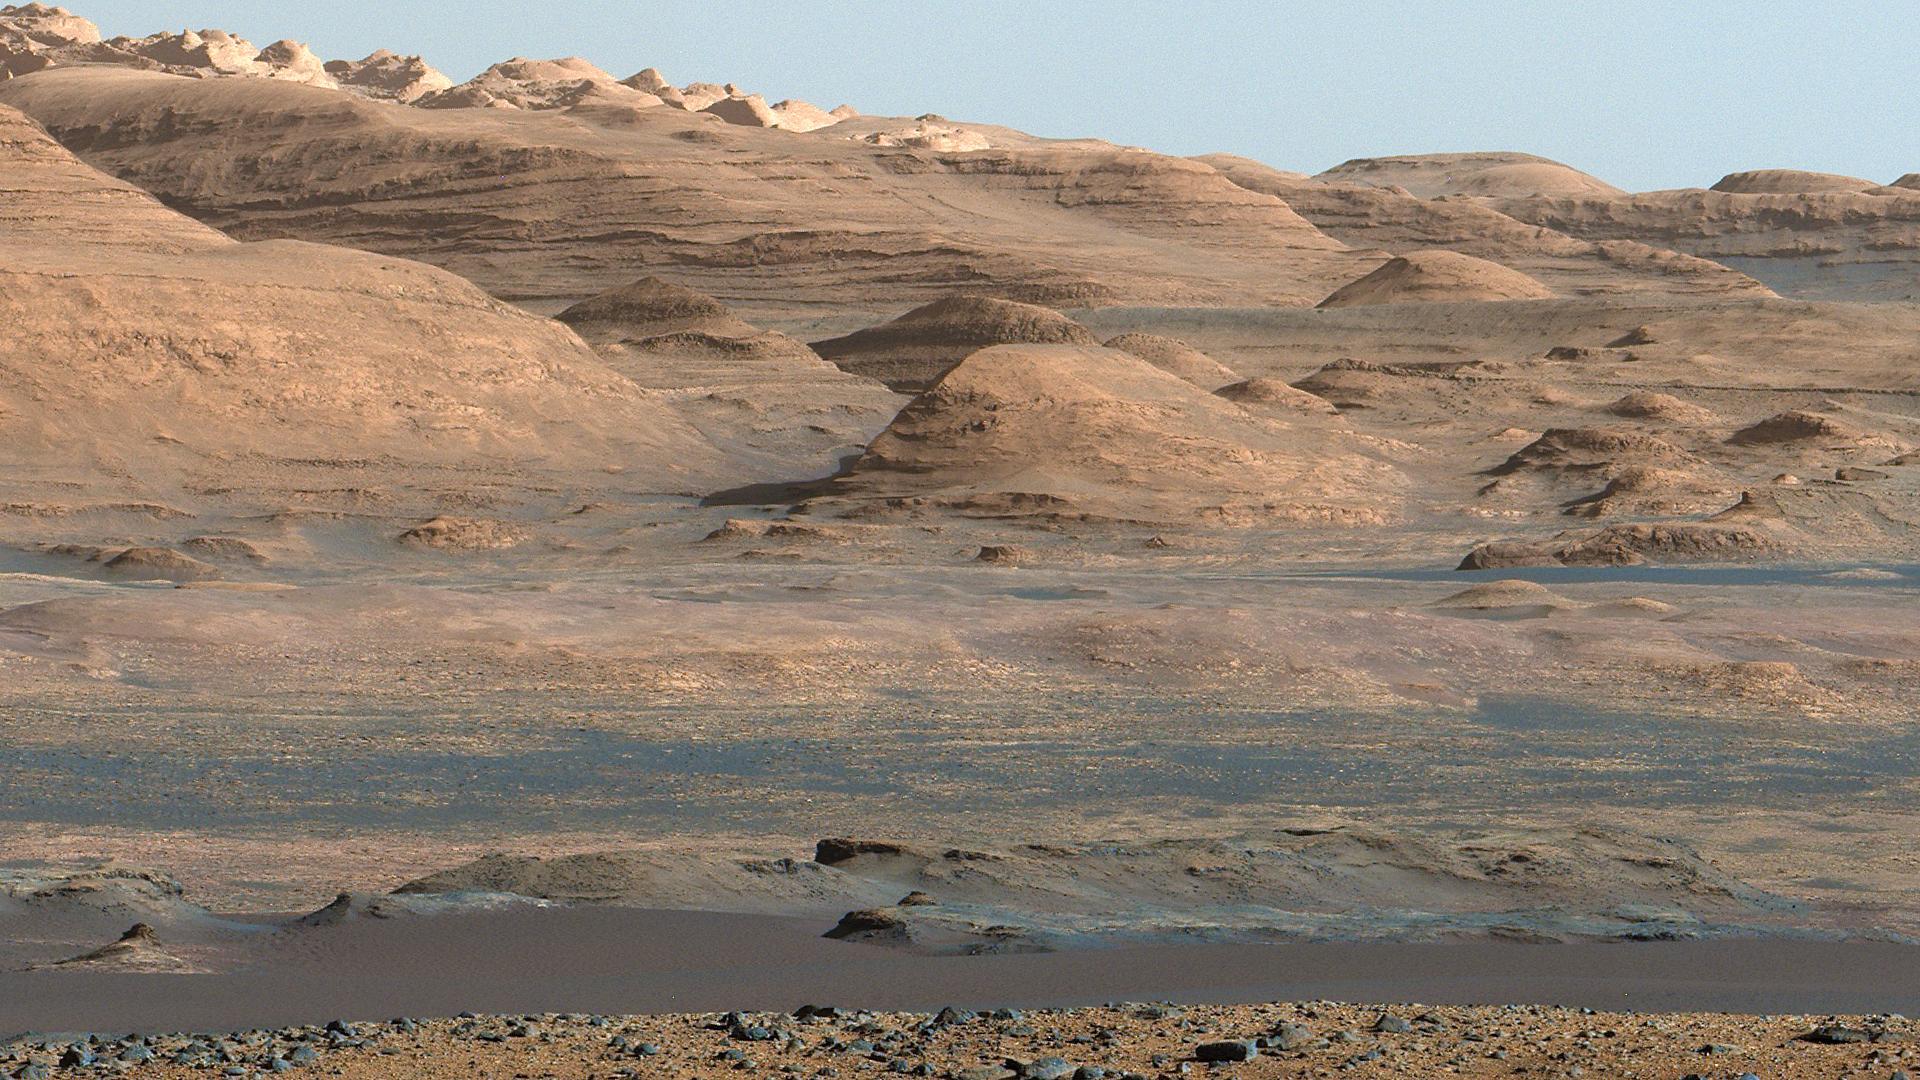 Mars Up Close, Part 2: John Grant